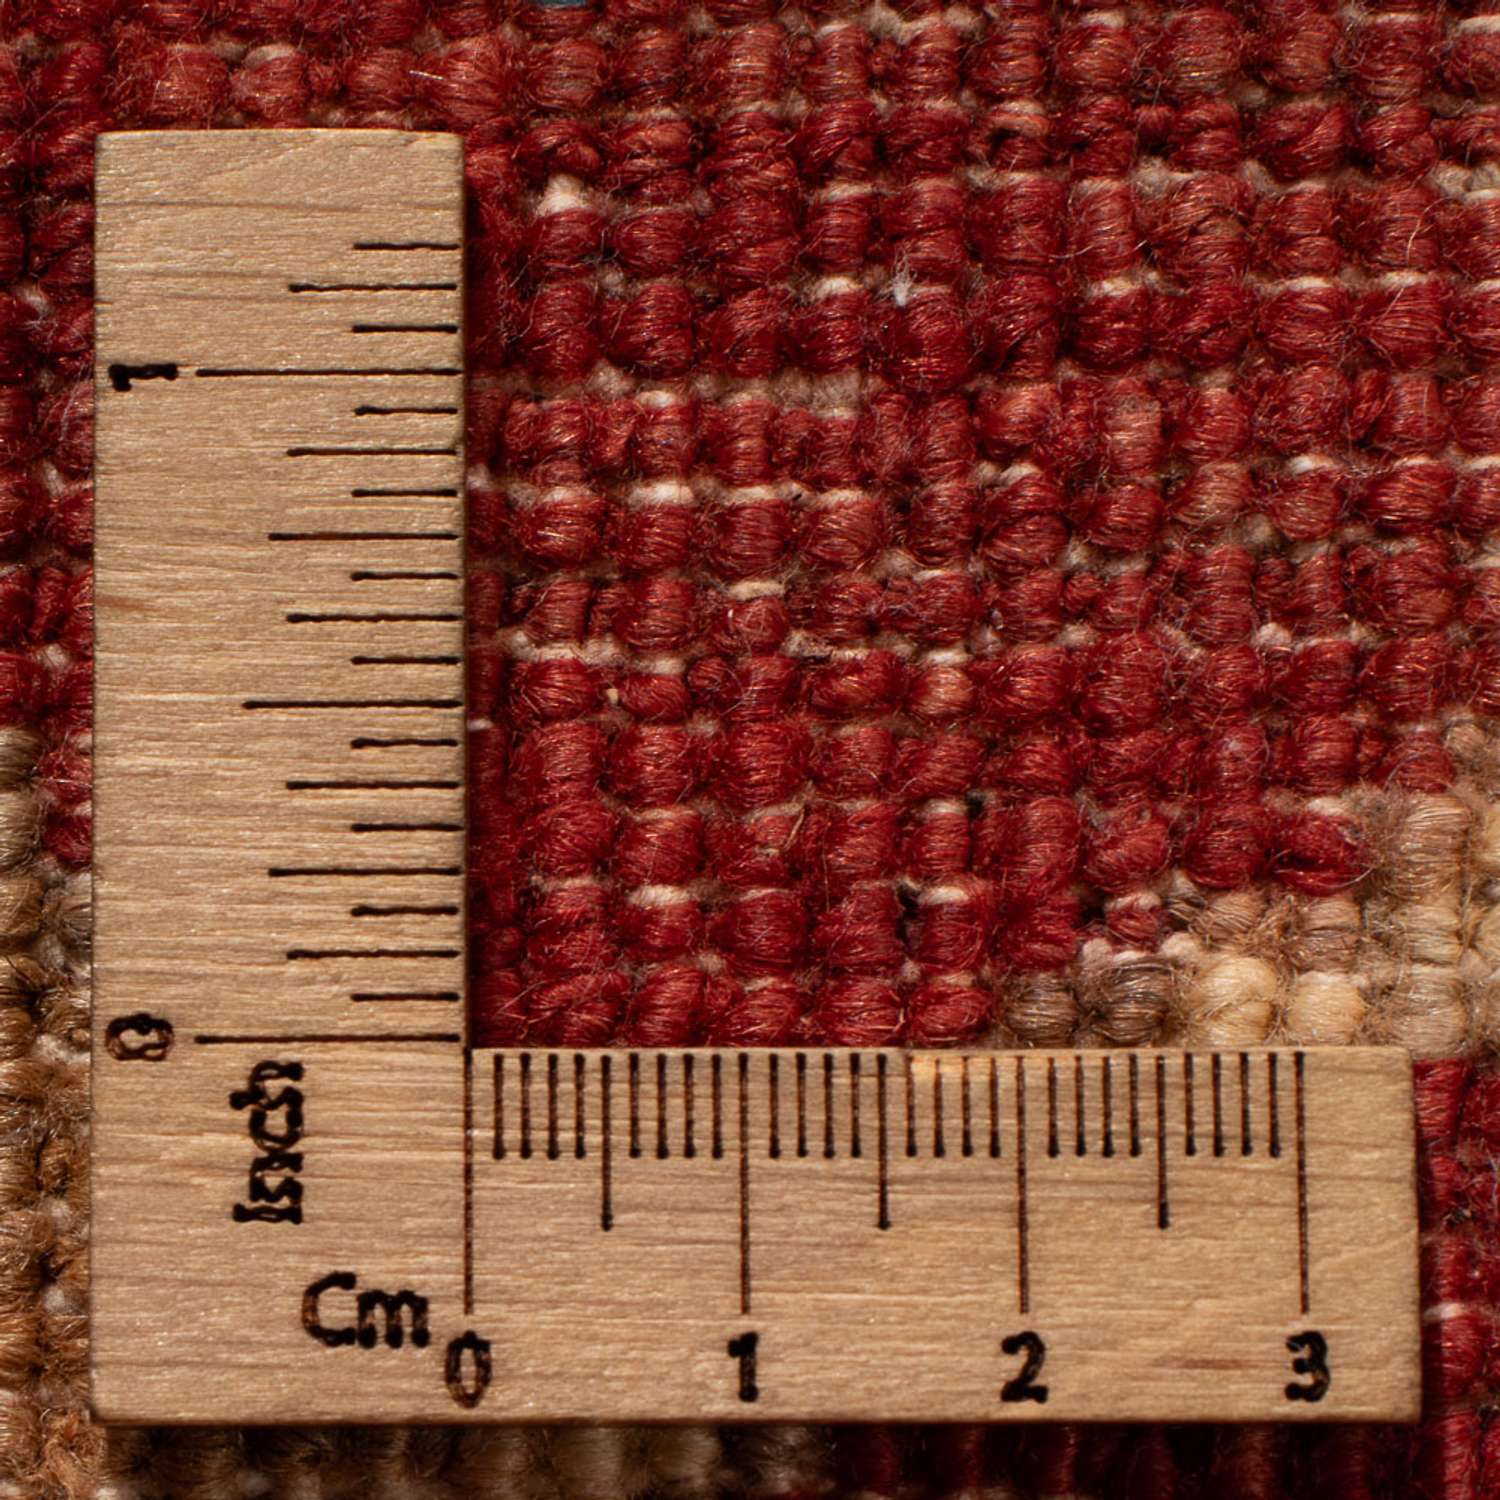 Ziegler Carpet - 455 x 308 cm - grädde